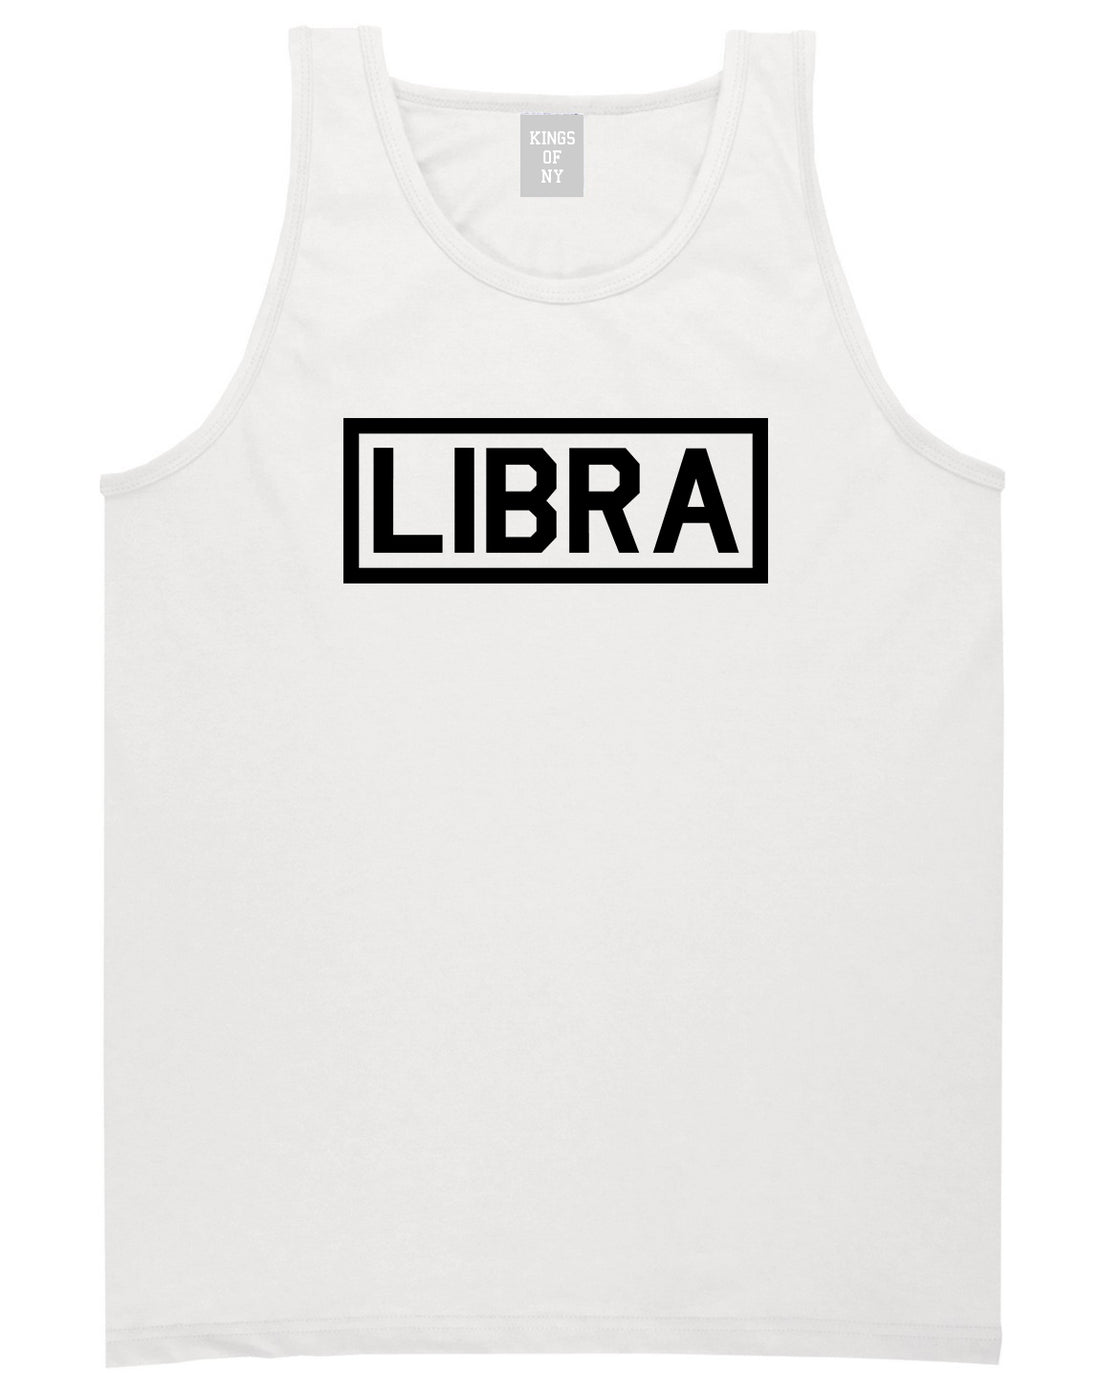 Libra Horoscope Sign Mens White Tank Top Shirt by KINGS OF NY